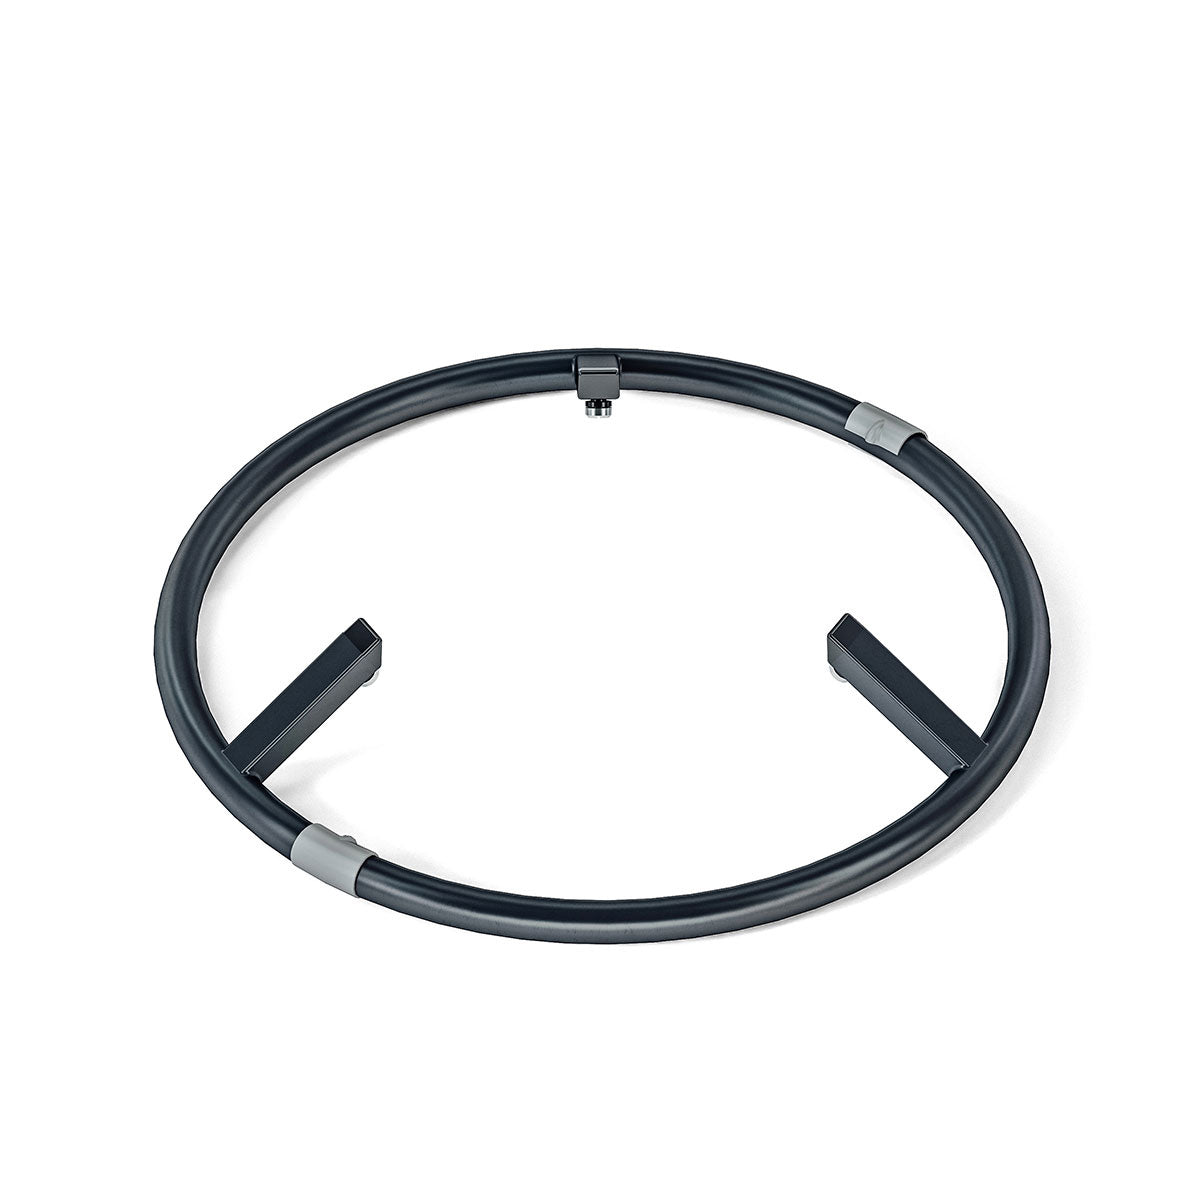 Sachtler(ザハトラー) バリオペデスタル アクセサリ Steering ring, small (3374-17)